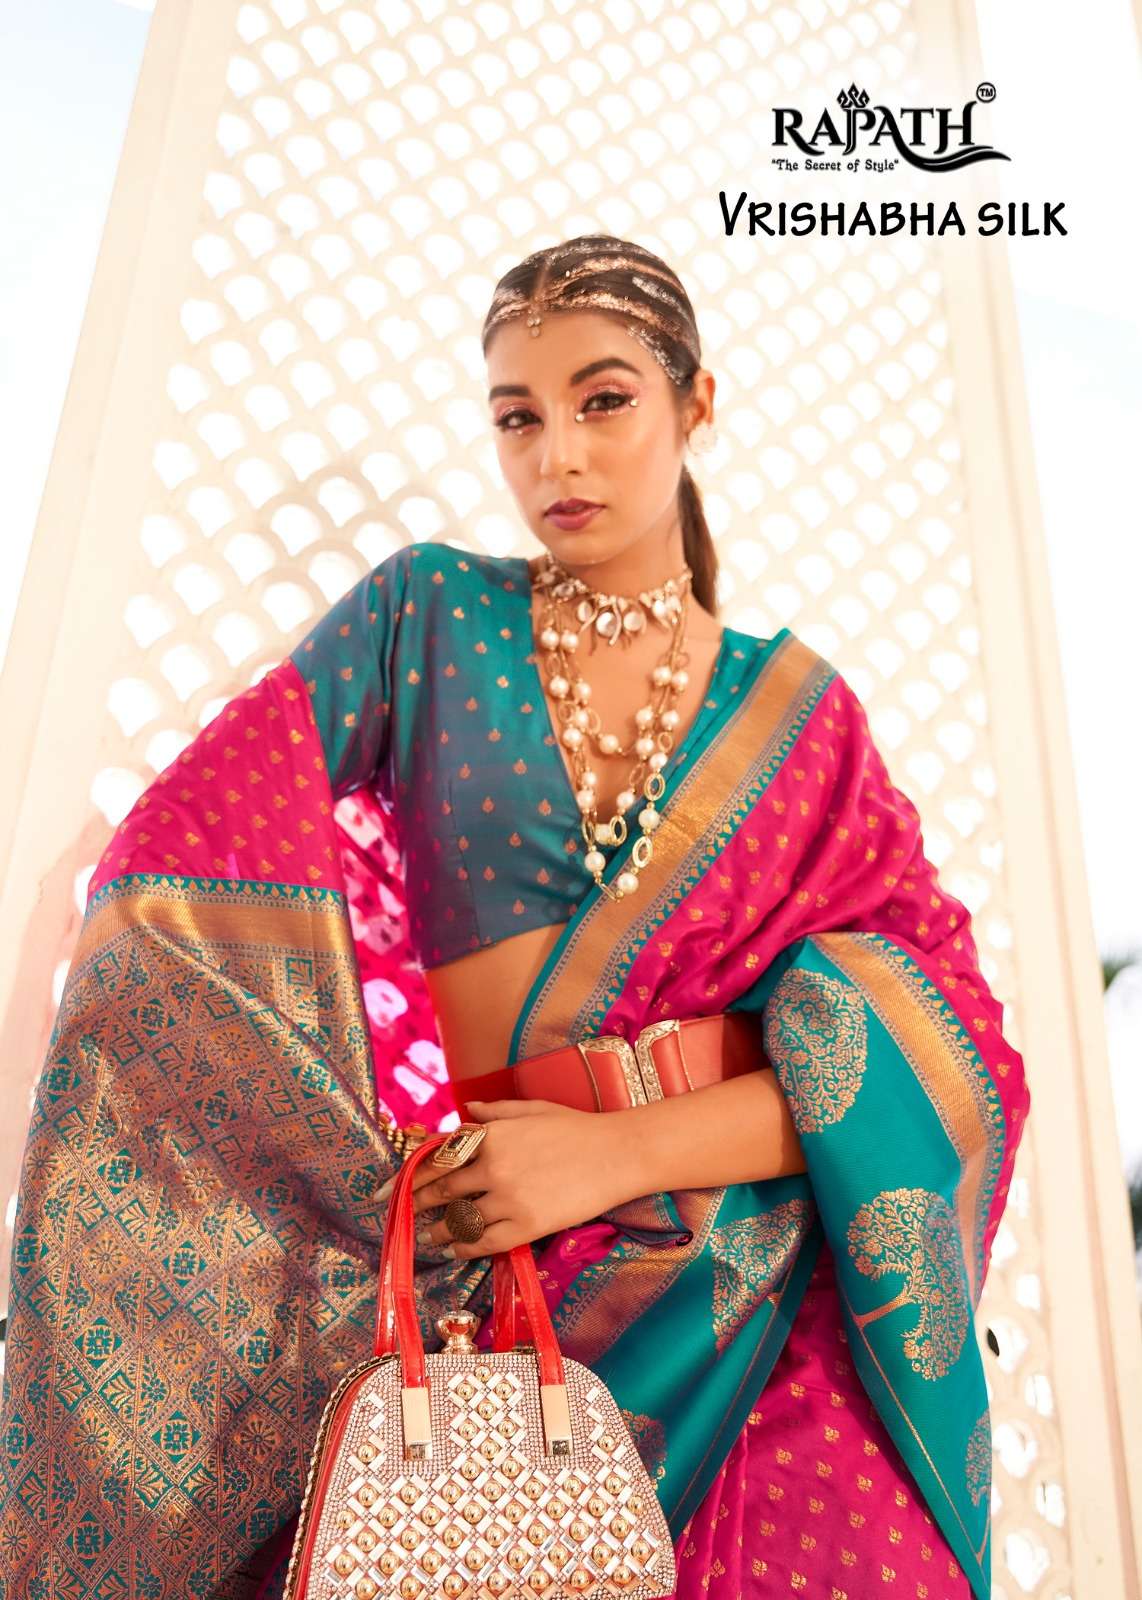 rajpath present vrishabha silk 145001-145008 soft banarasi paithani with copper zari weaving sarees collection 